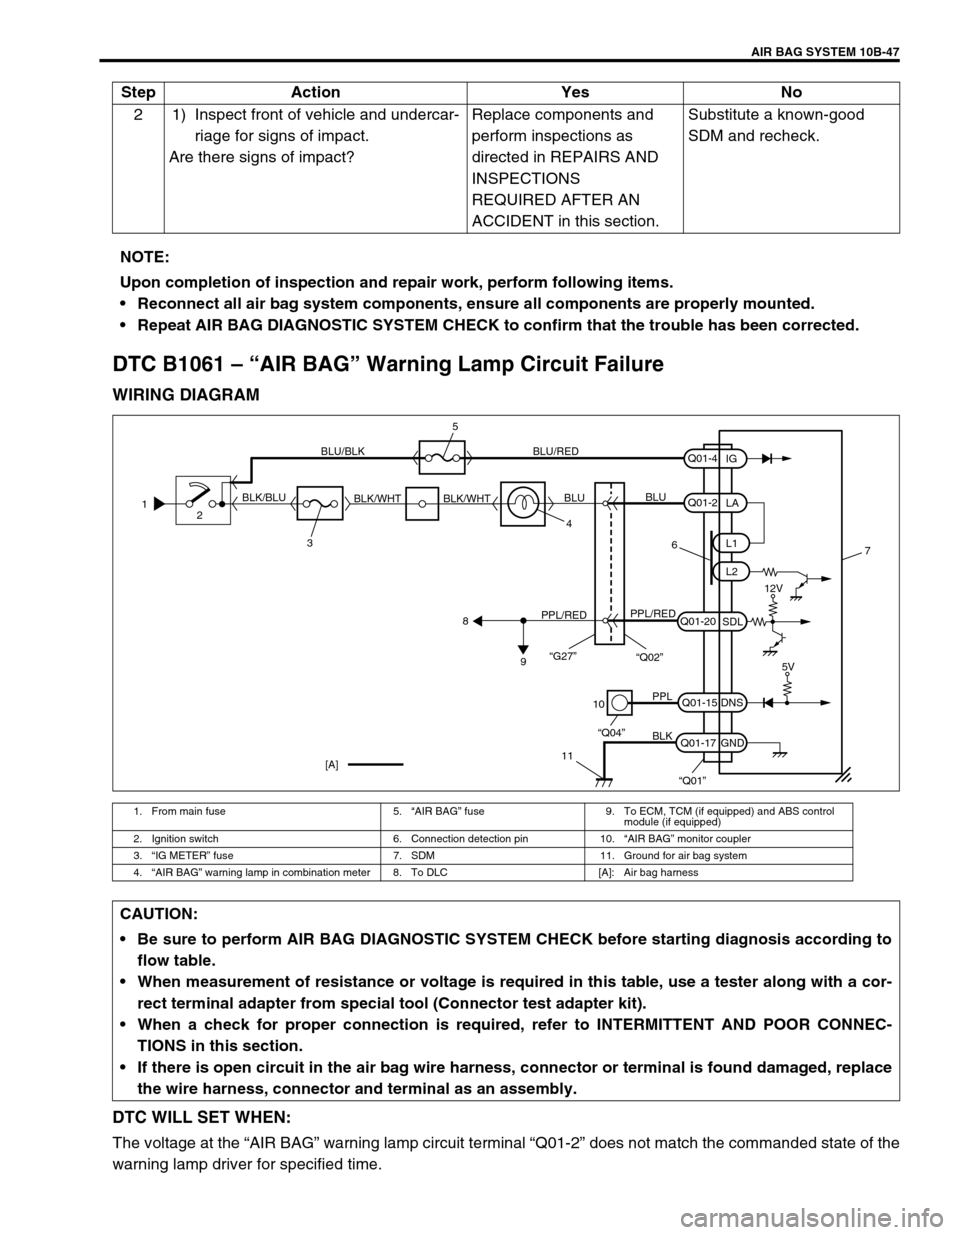 SUZUKI GRAND VITARA 2001 2.G Manual PDF AIR BAG SYSTEM 10B-47
DTC B1061 – “AIR BAG” Warning Lamp Circuit Failure
WIRING DIAGRAM
DTC WILL SET WHEN:
The voltage at the “AIR BAG” warning lamp circuit terminal “Q01-2” does not mat